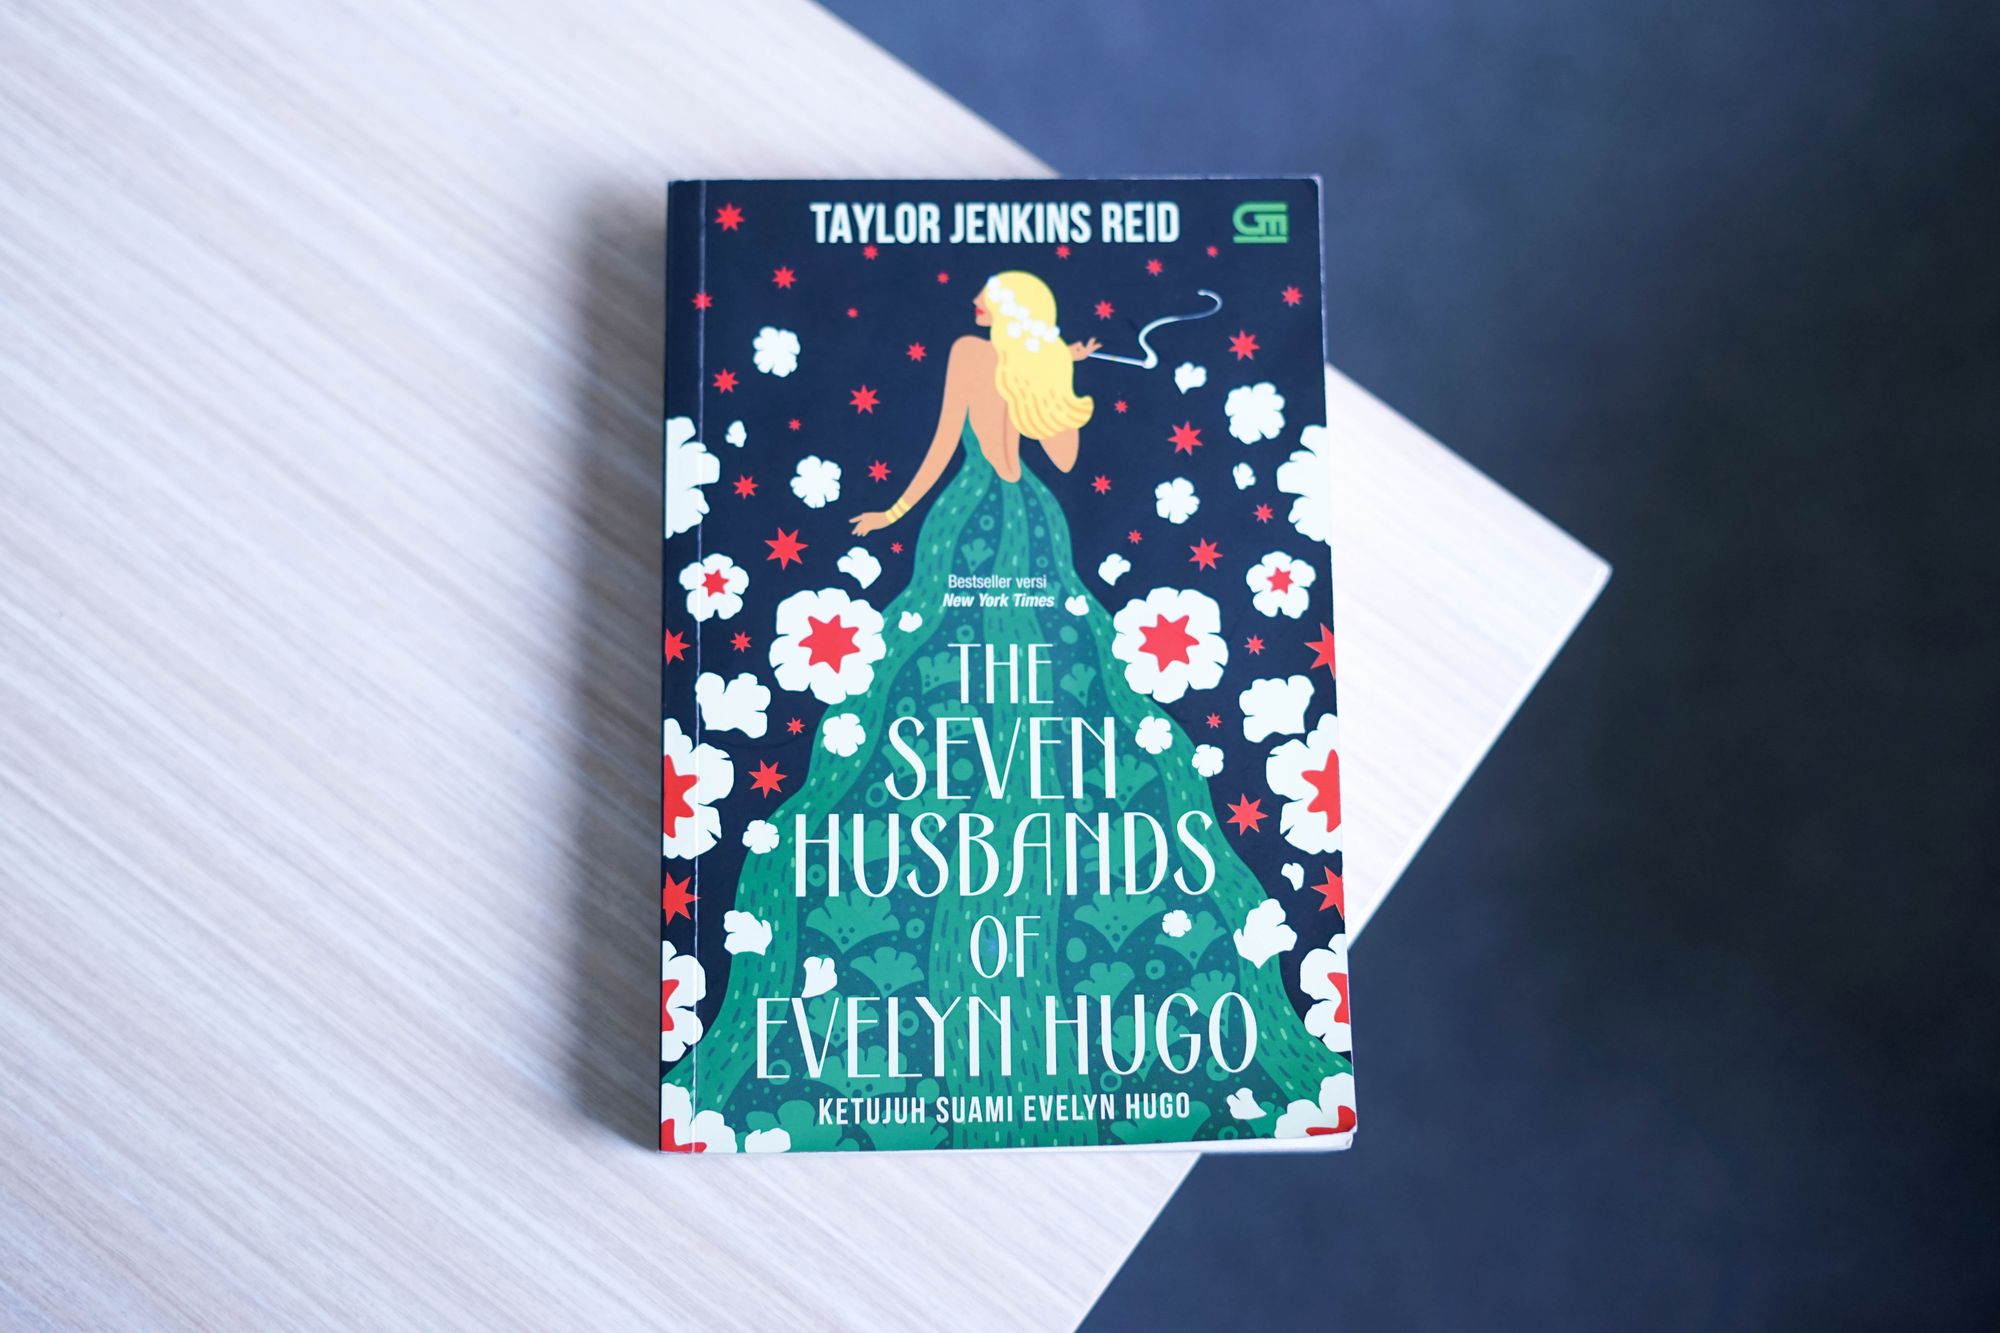 Ketujuh Suami Evelyn Hugo: Siapa yang Paling Ia Cintai?